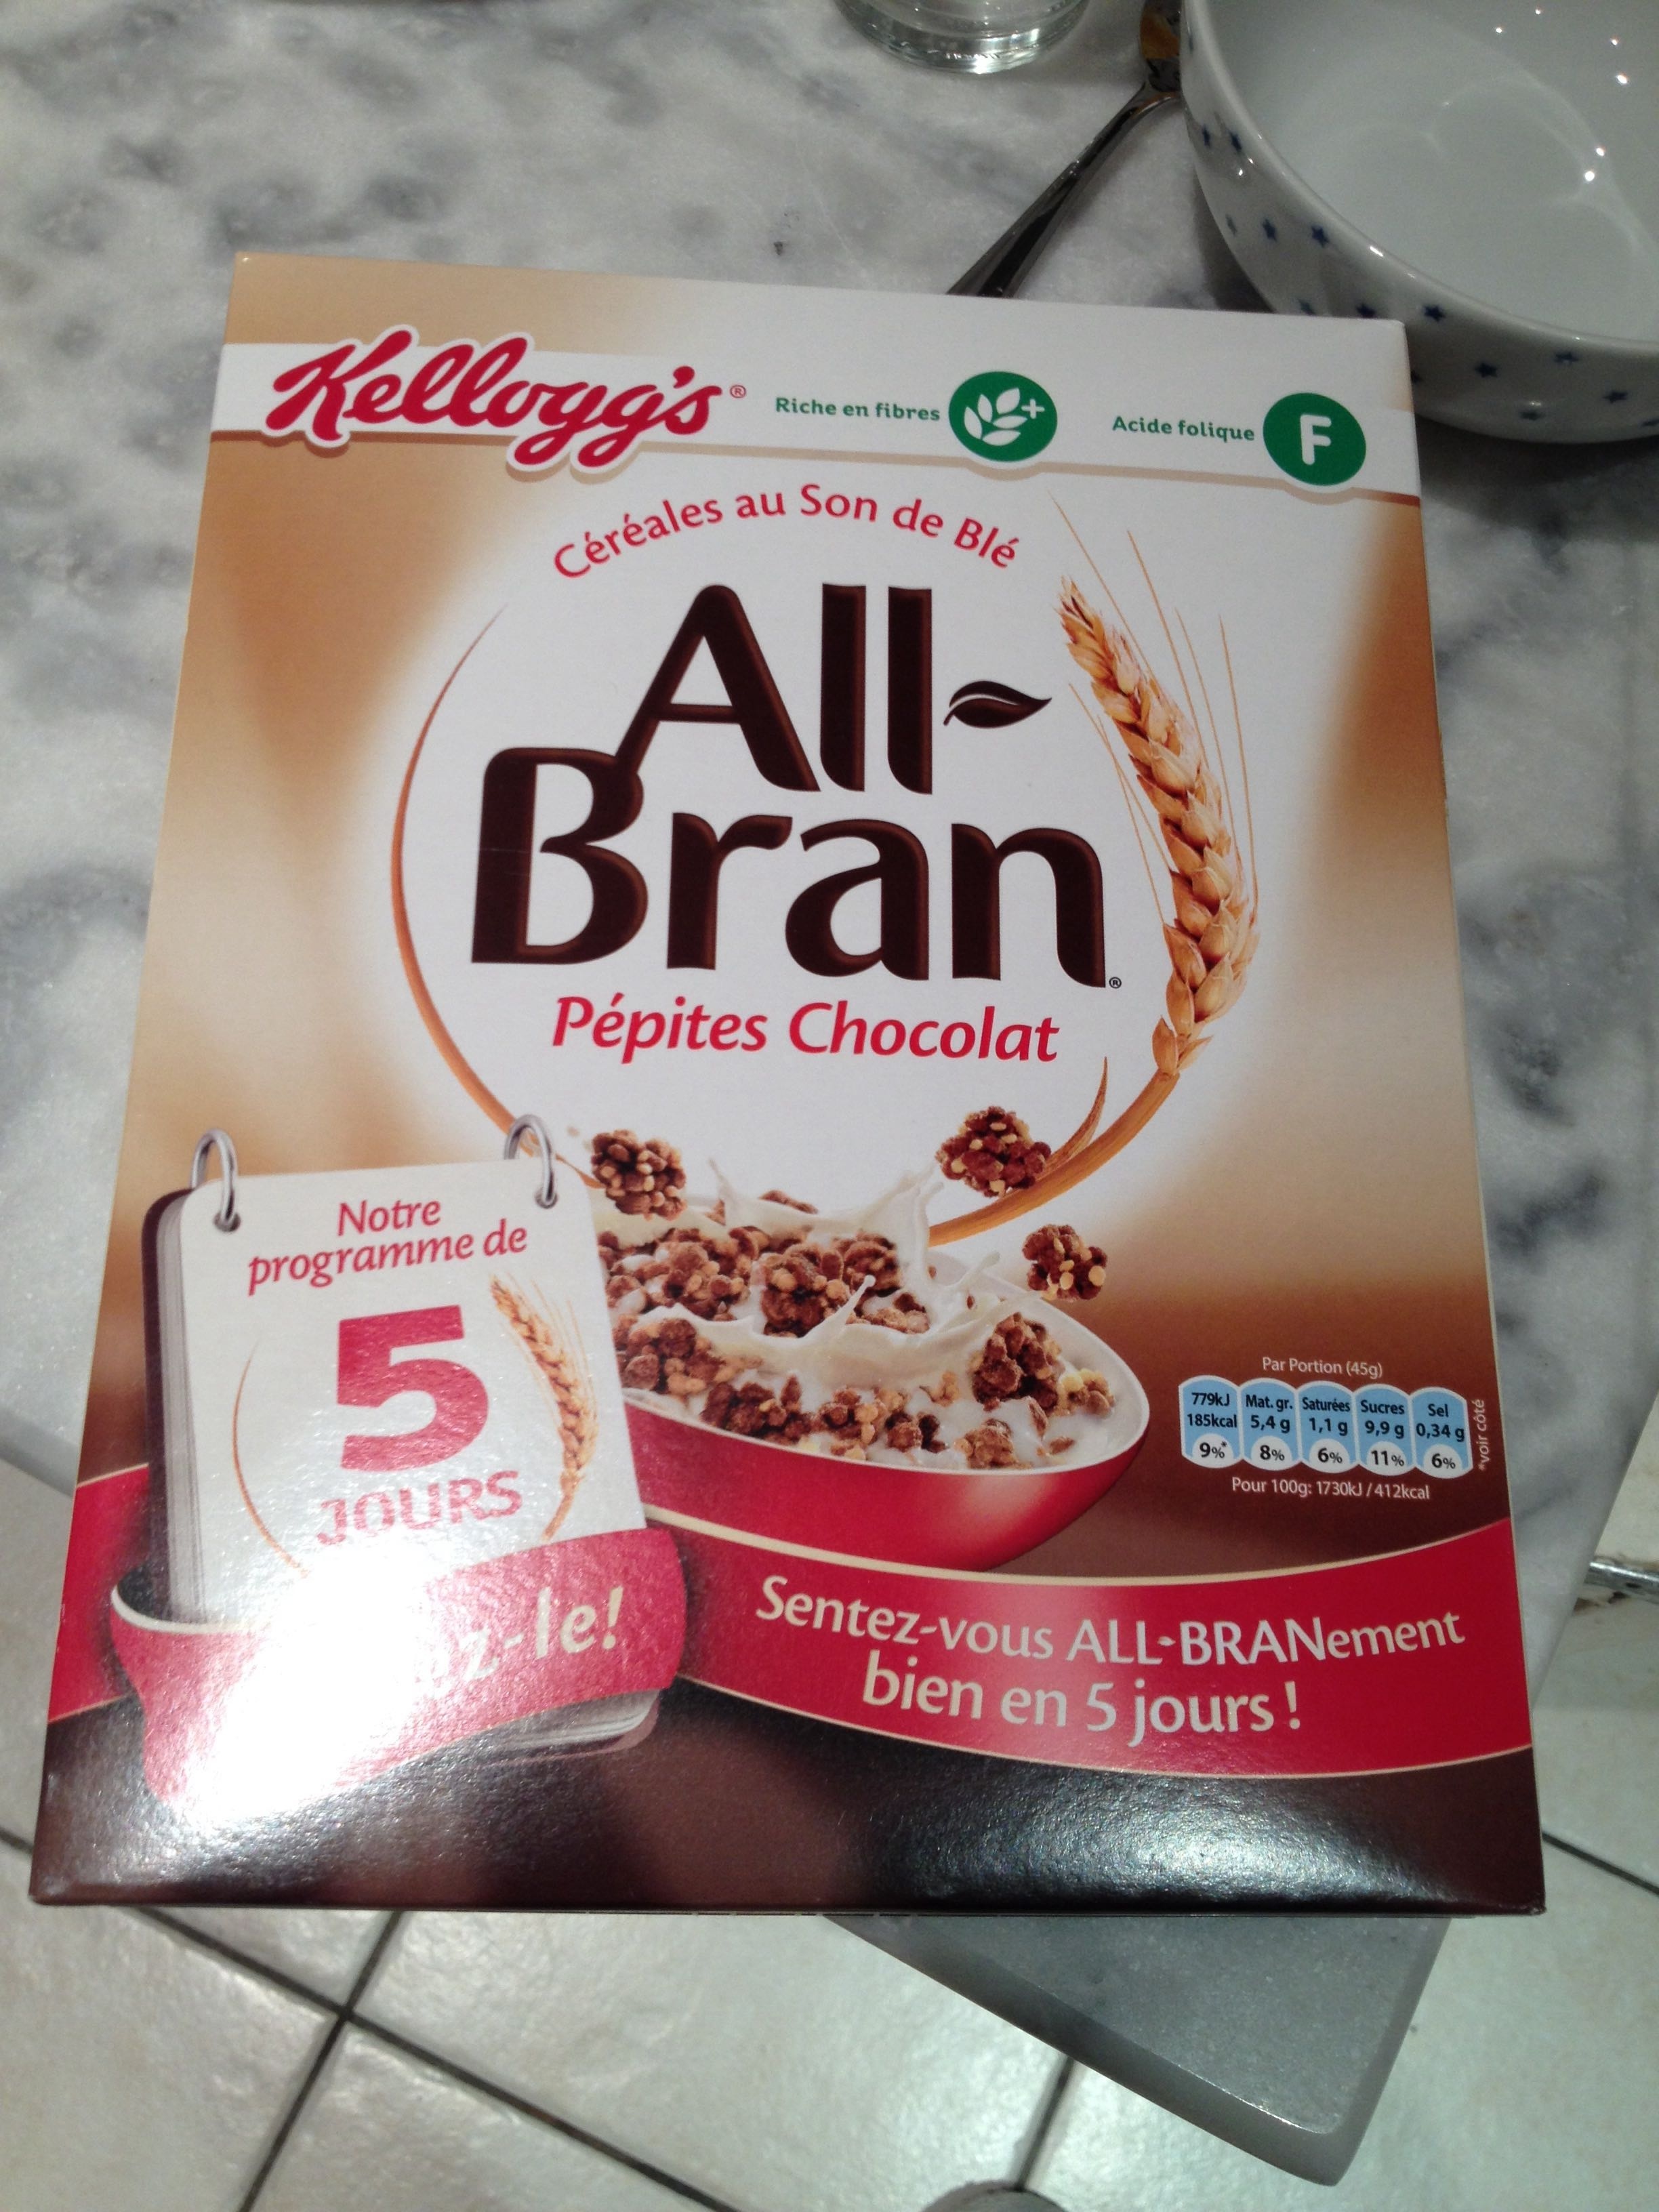 All bran pépites chocolat - Product - fr